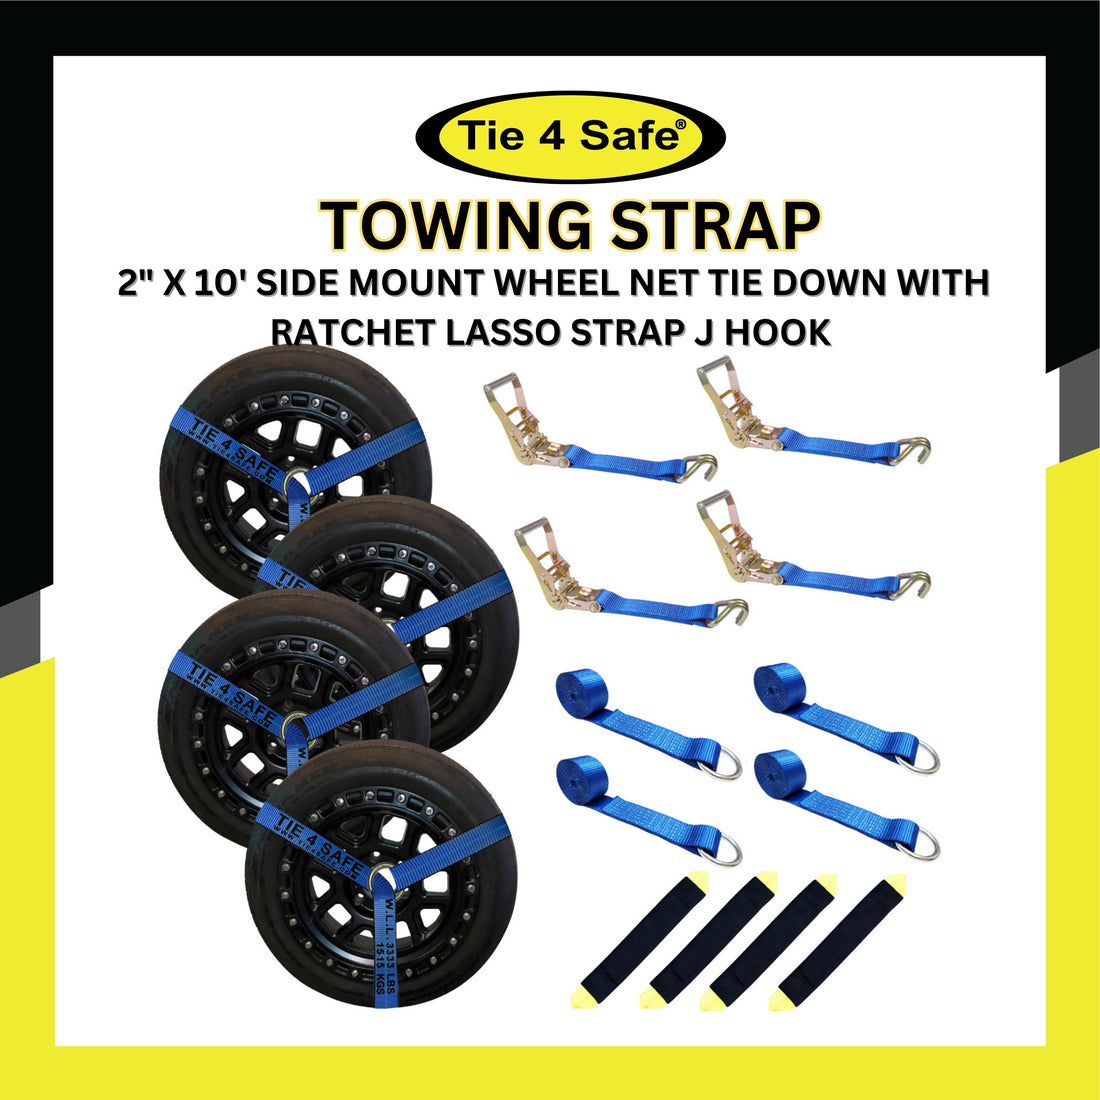 USA 4 Pack 2" x 10' Side Mount Wheel Net Tie Down With Ratchet Lasso Strap J Hook